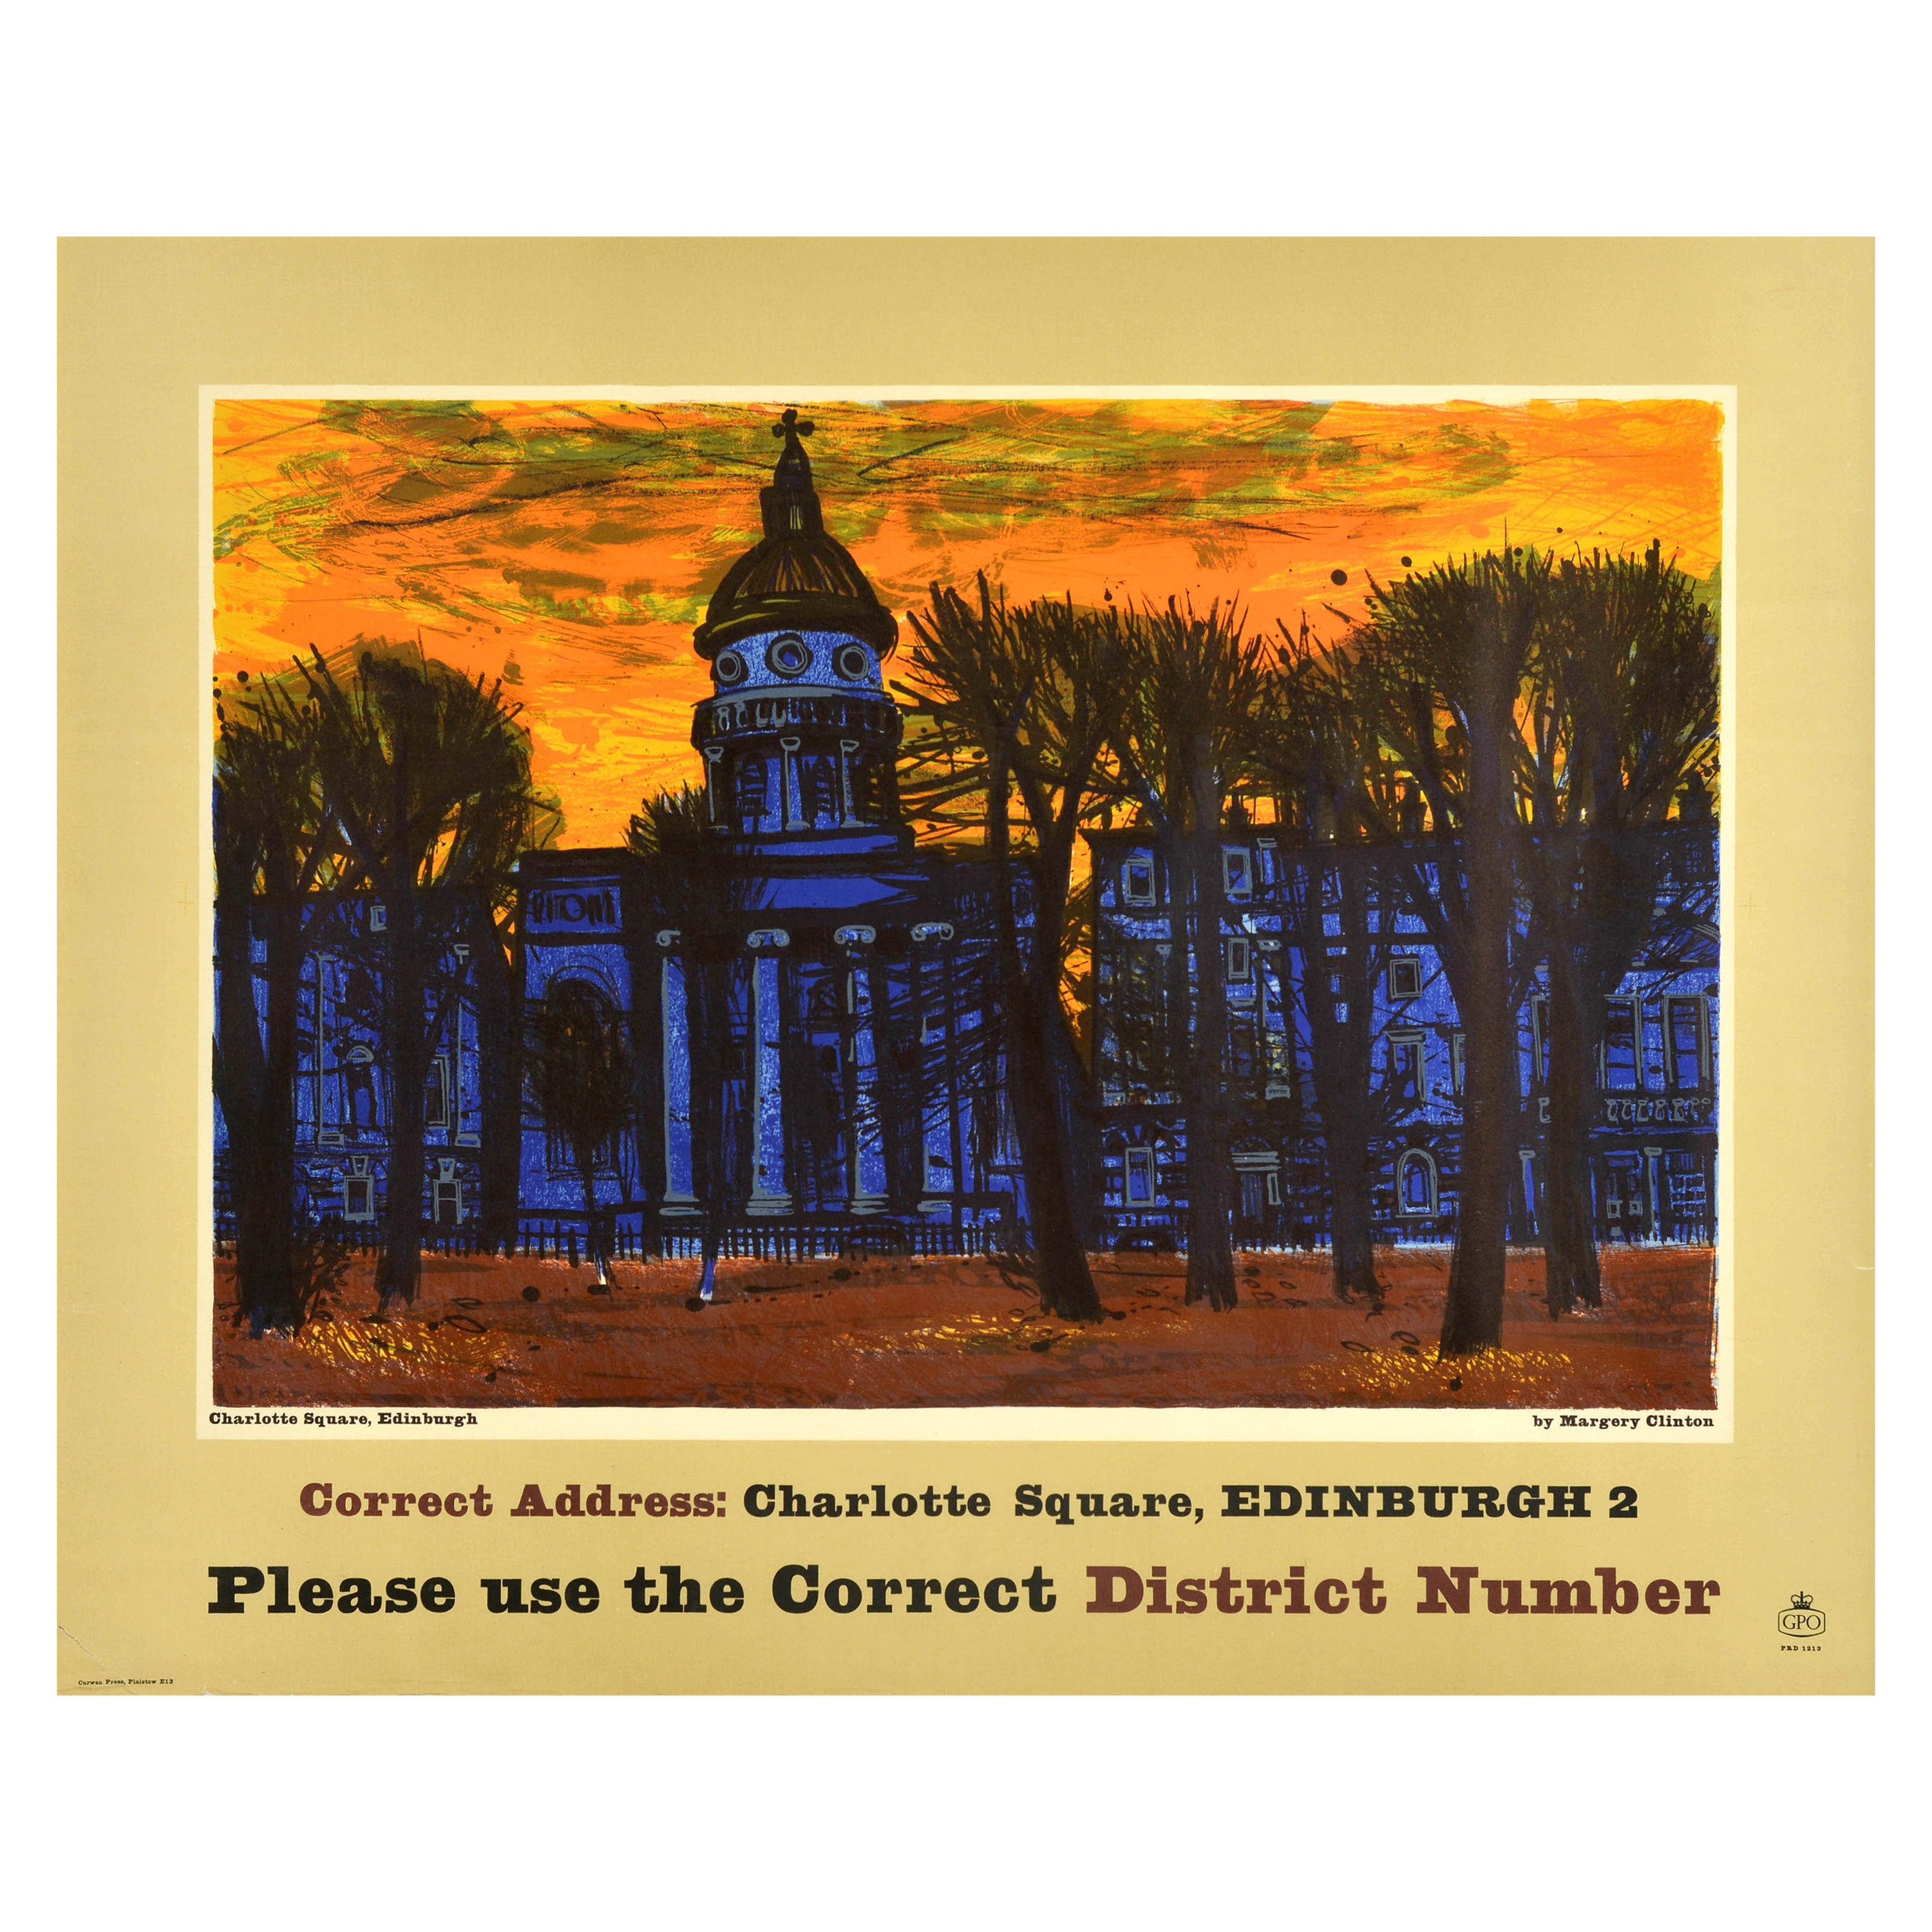 Original Vintage Post Office Advertising Poster Charlotte Square Edinburgh GPO For Sale